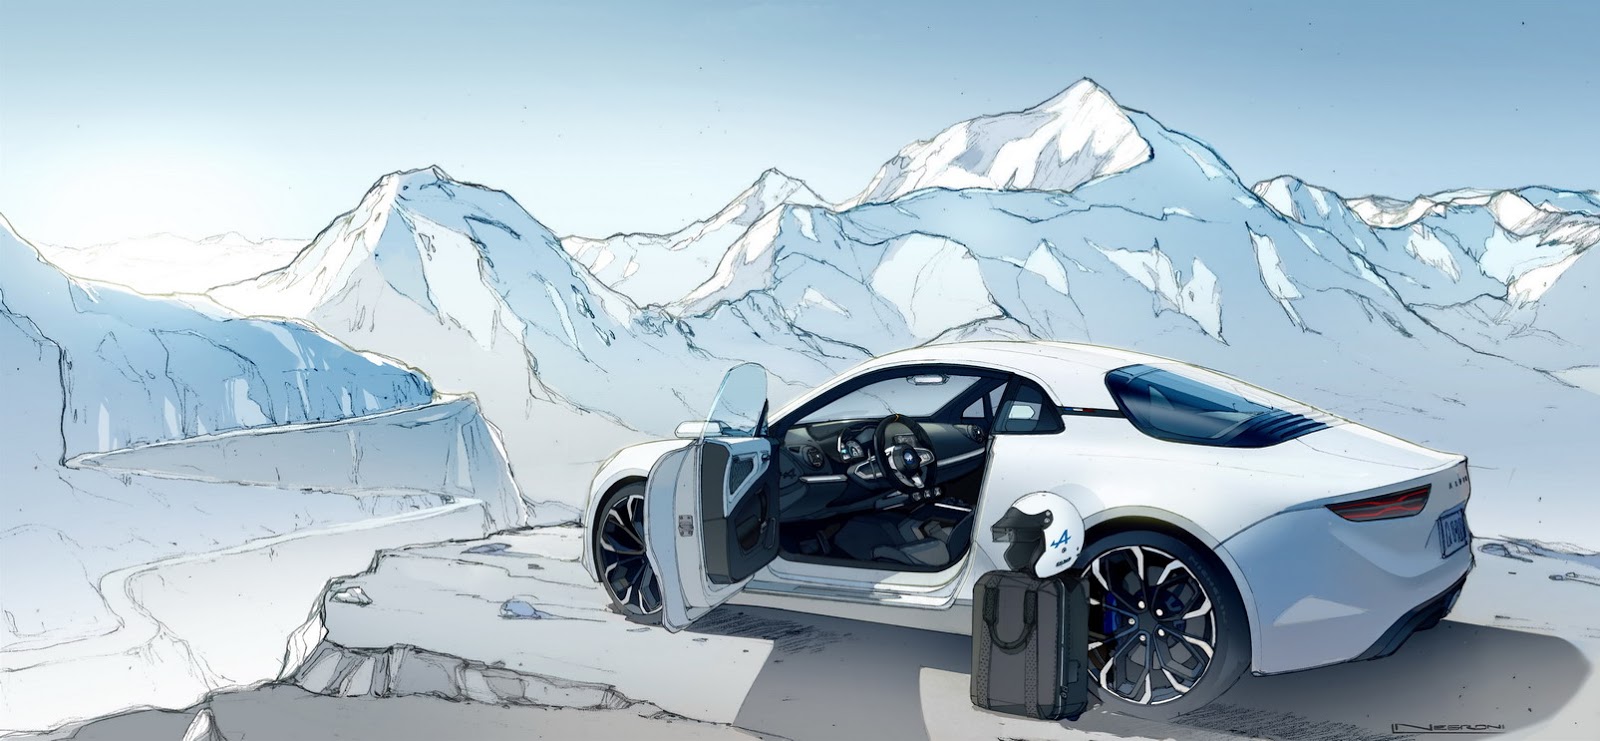 Alpine Vision Concept, 2016 - Design Skech